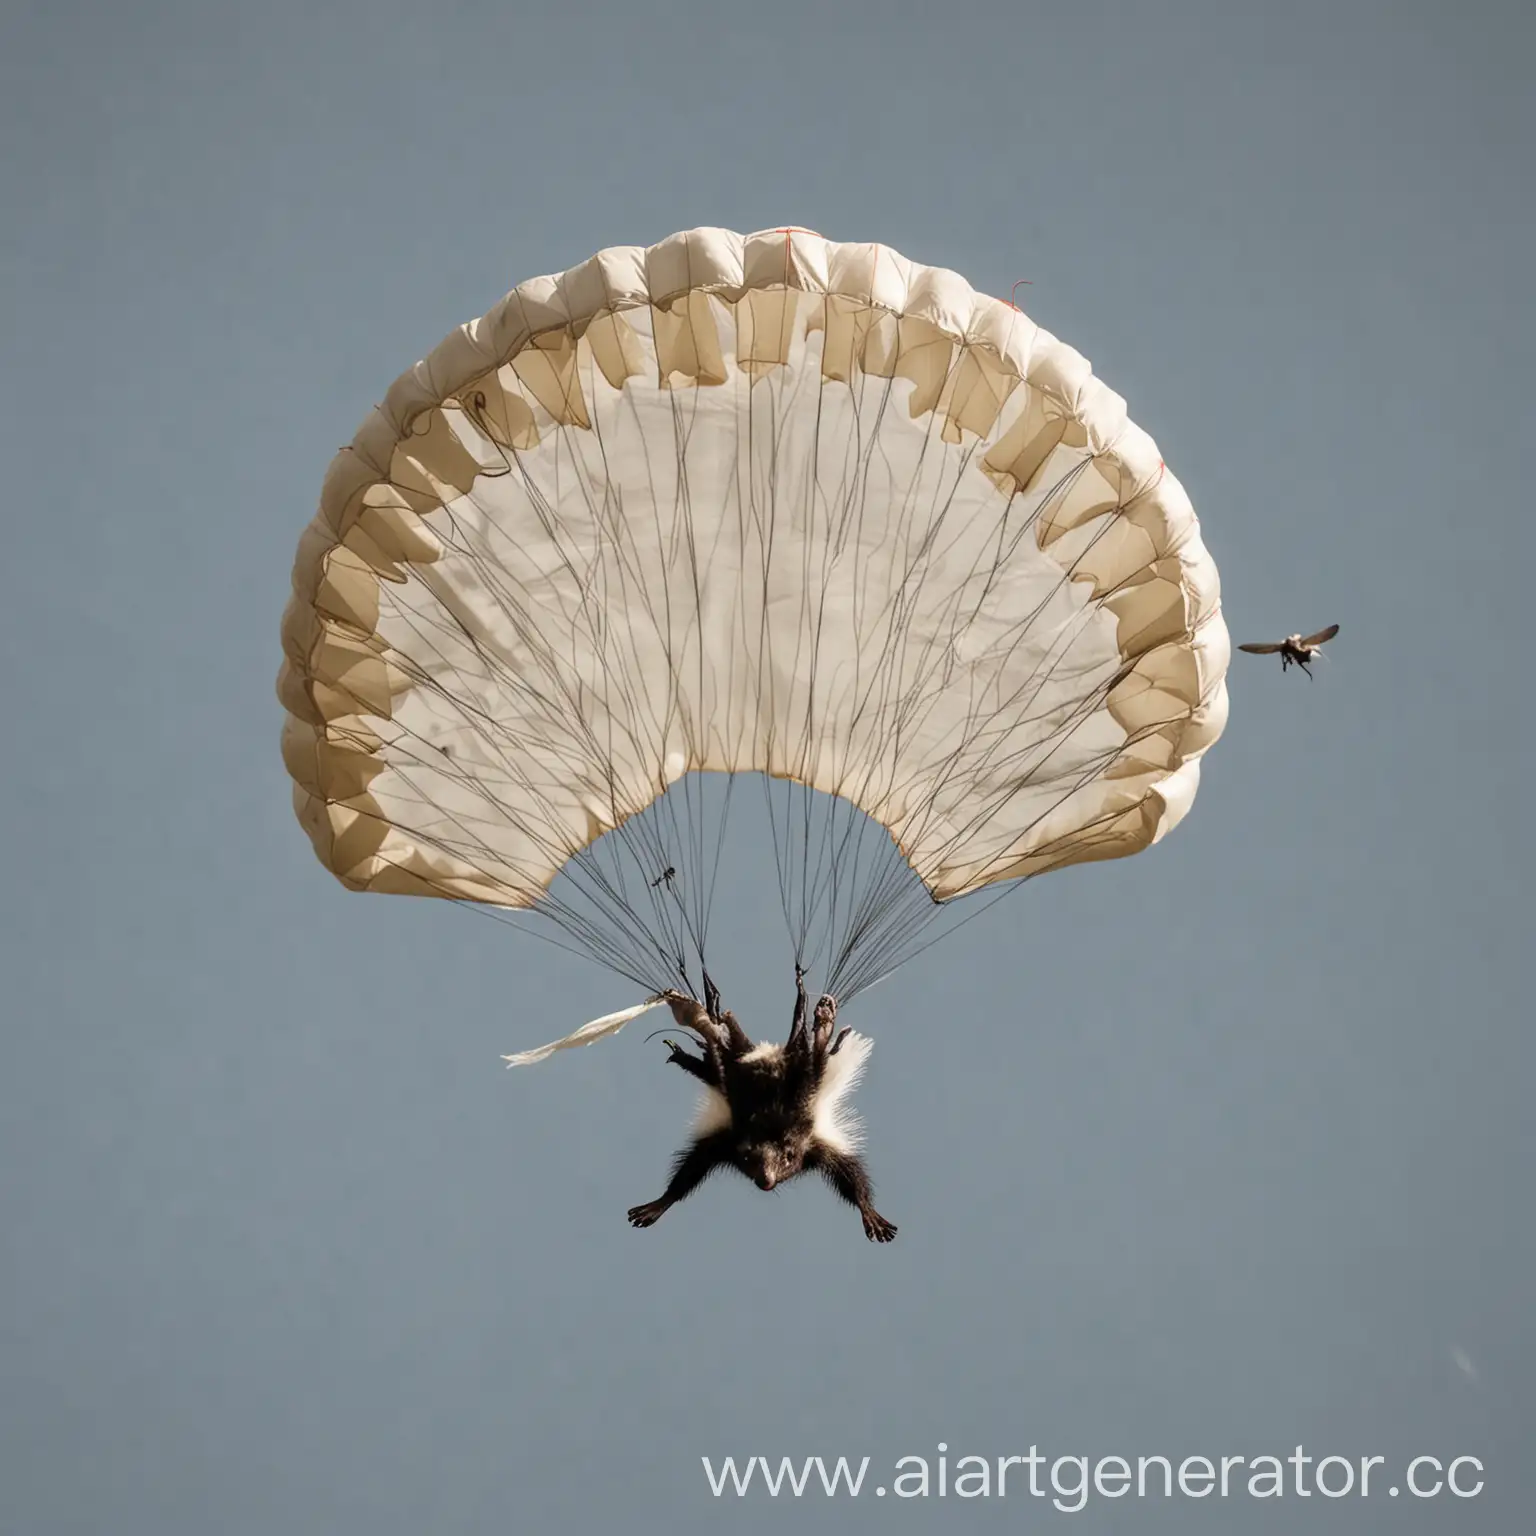 Skunk-Flying-on-Parachute-in-Blue-Sky-Adventure